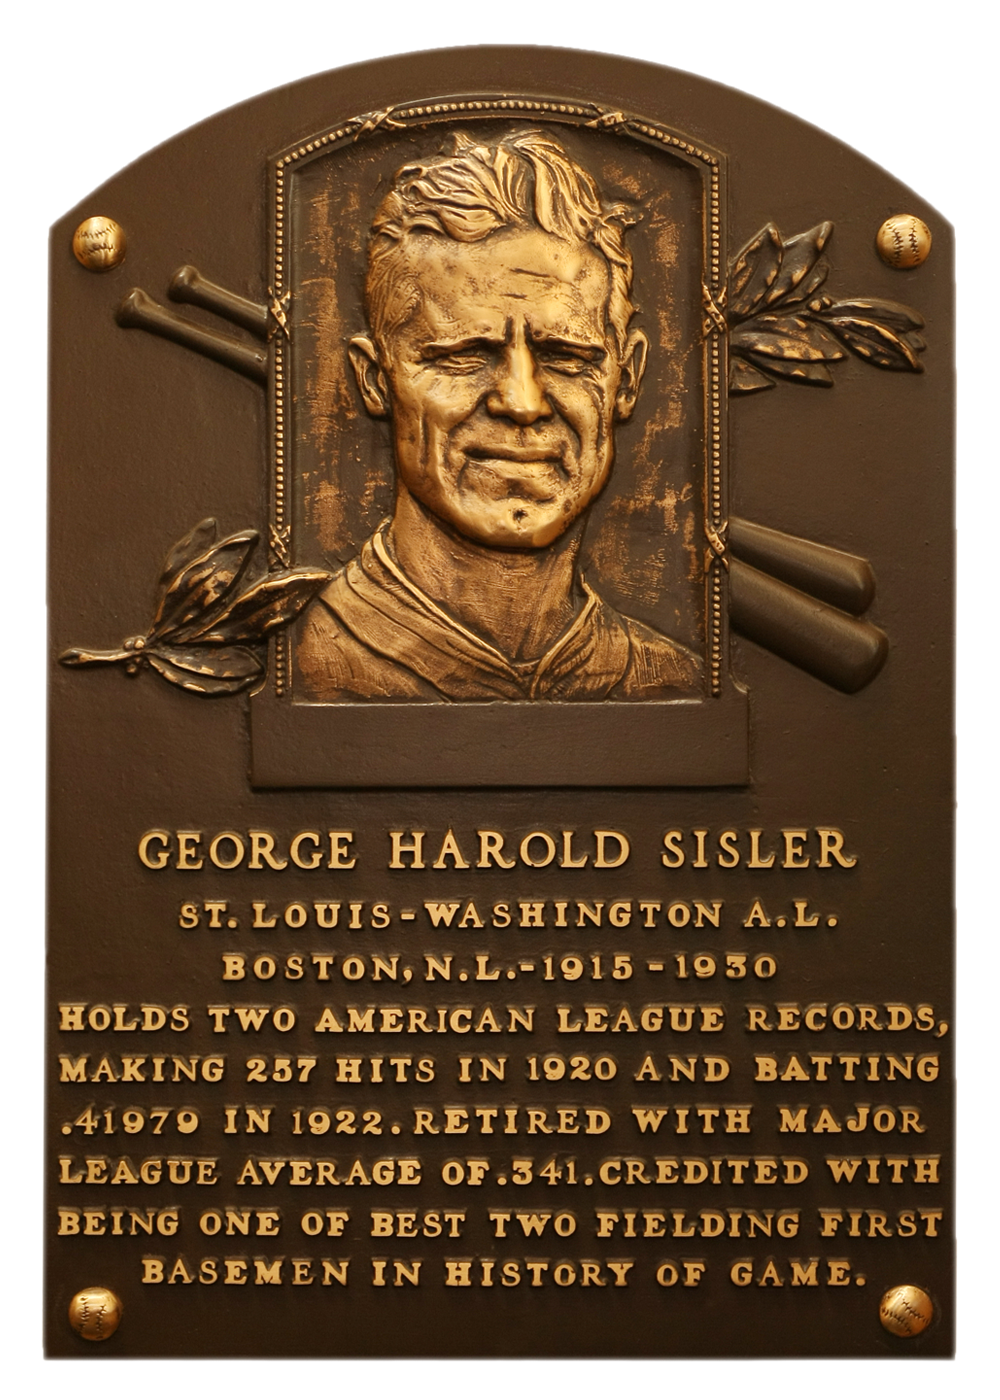 George Sisler Hall of Fame plaque